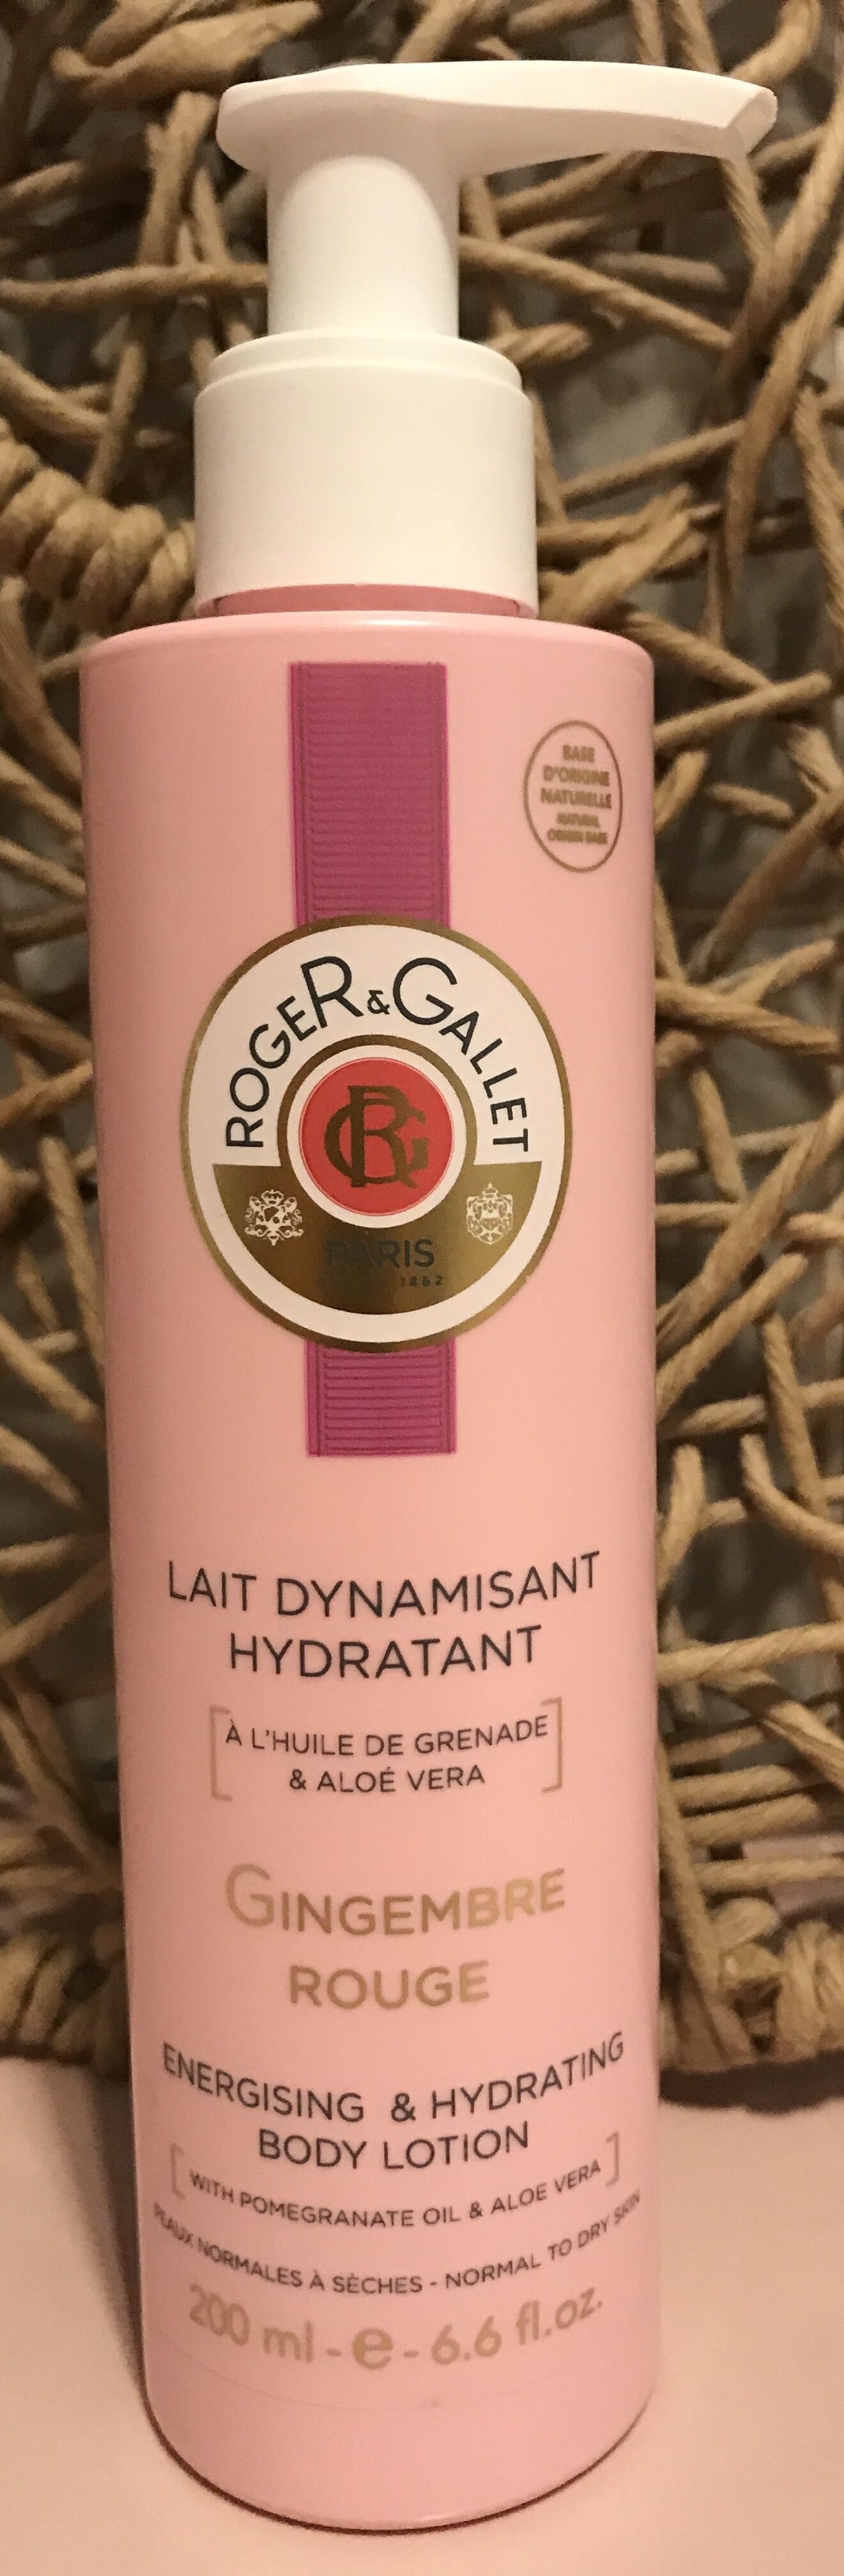 Lait dynamisant hydratant Gingembre Rouge - 製品 - fr